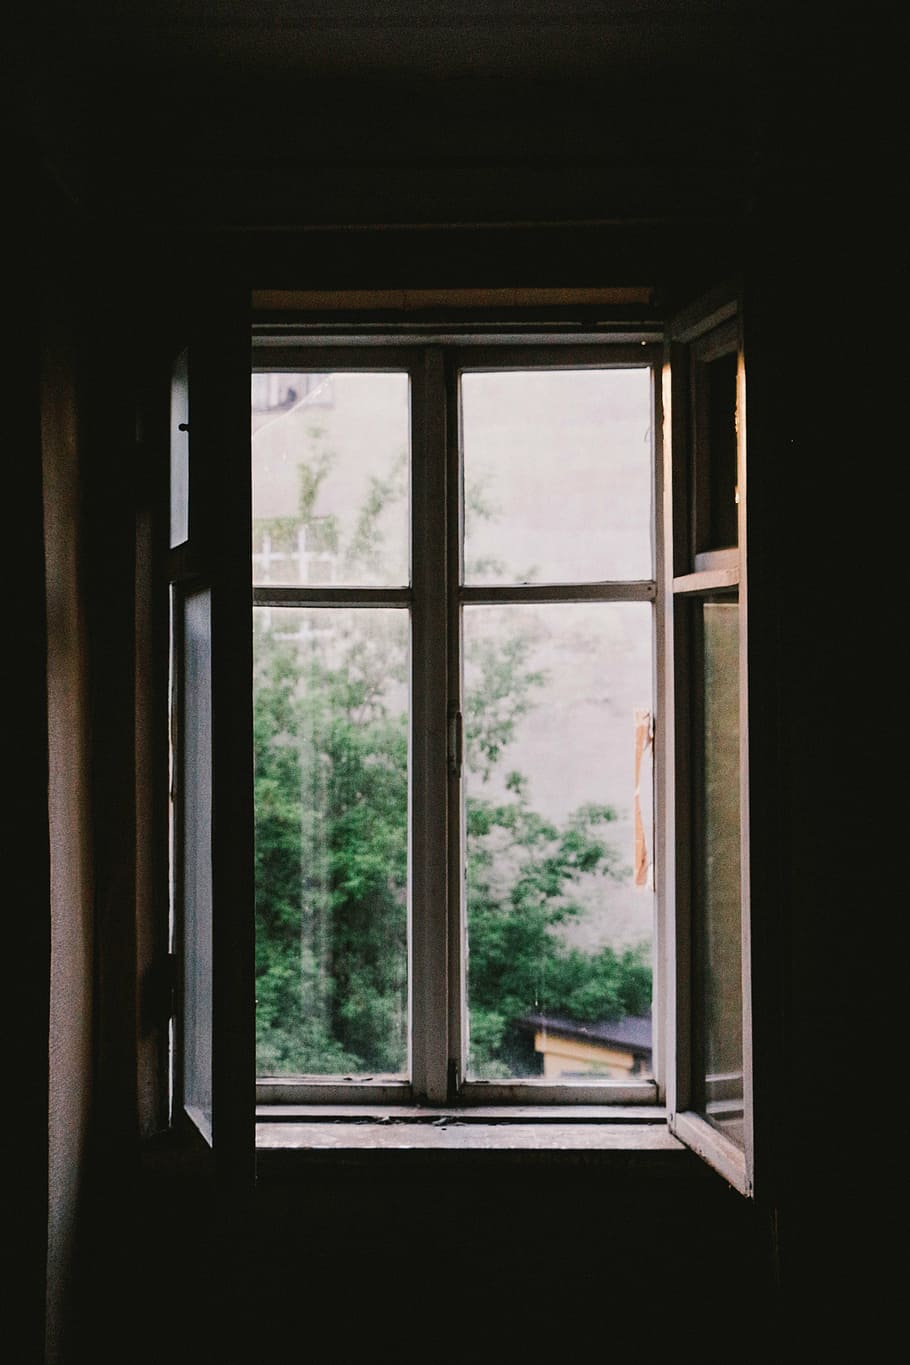 abierto, blanco, de madera, ventana, panel de vidrio, oscuro, escudo, vidrio, mirando a través de la ventana, marco de ventana